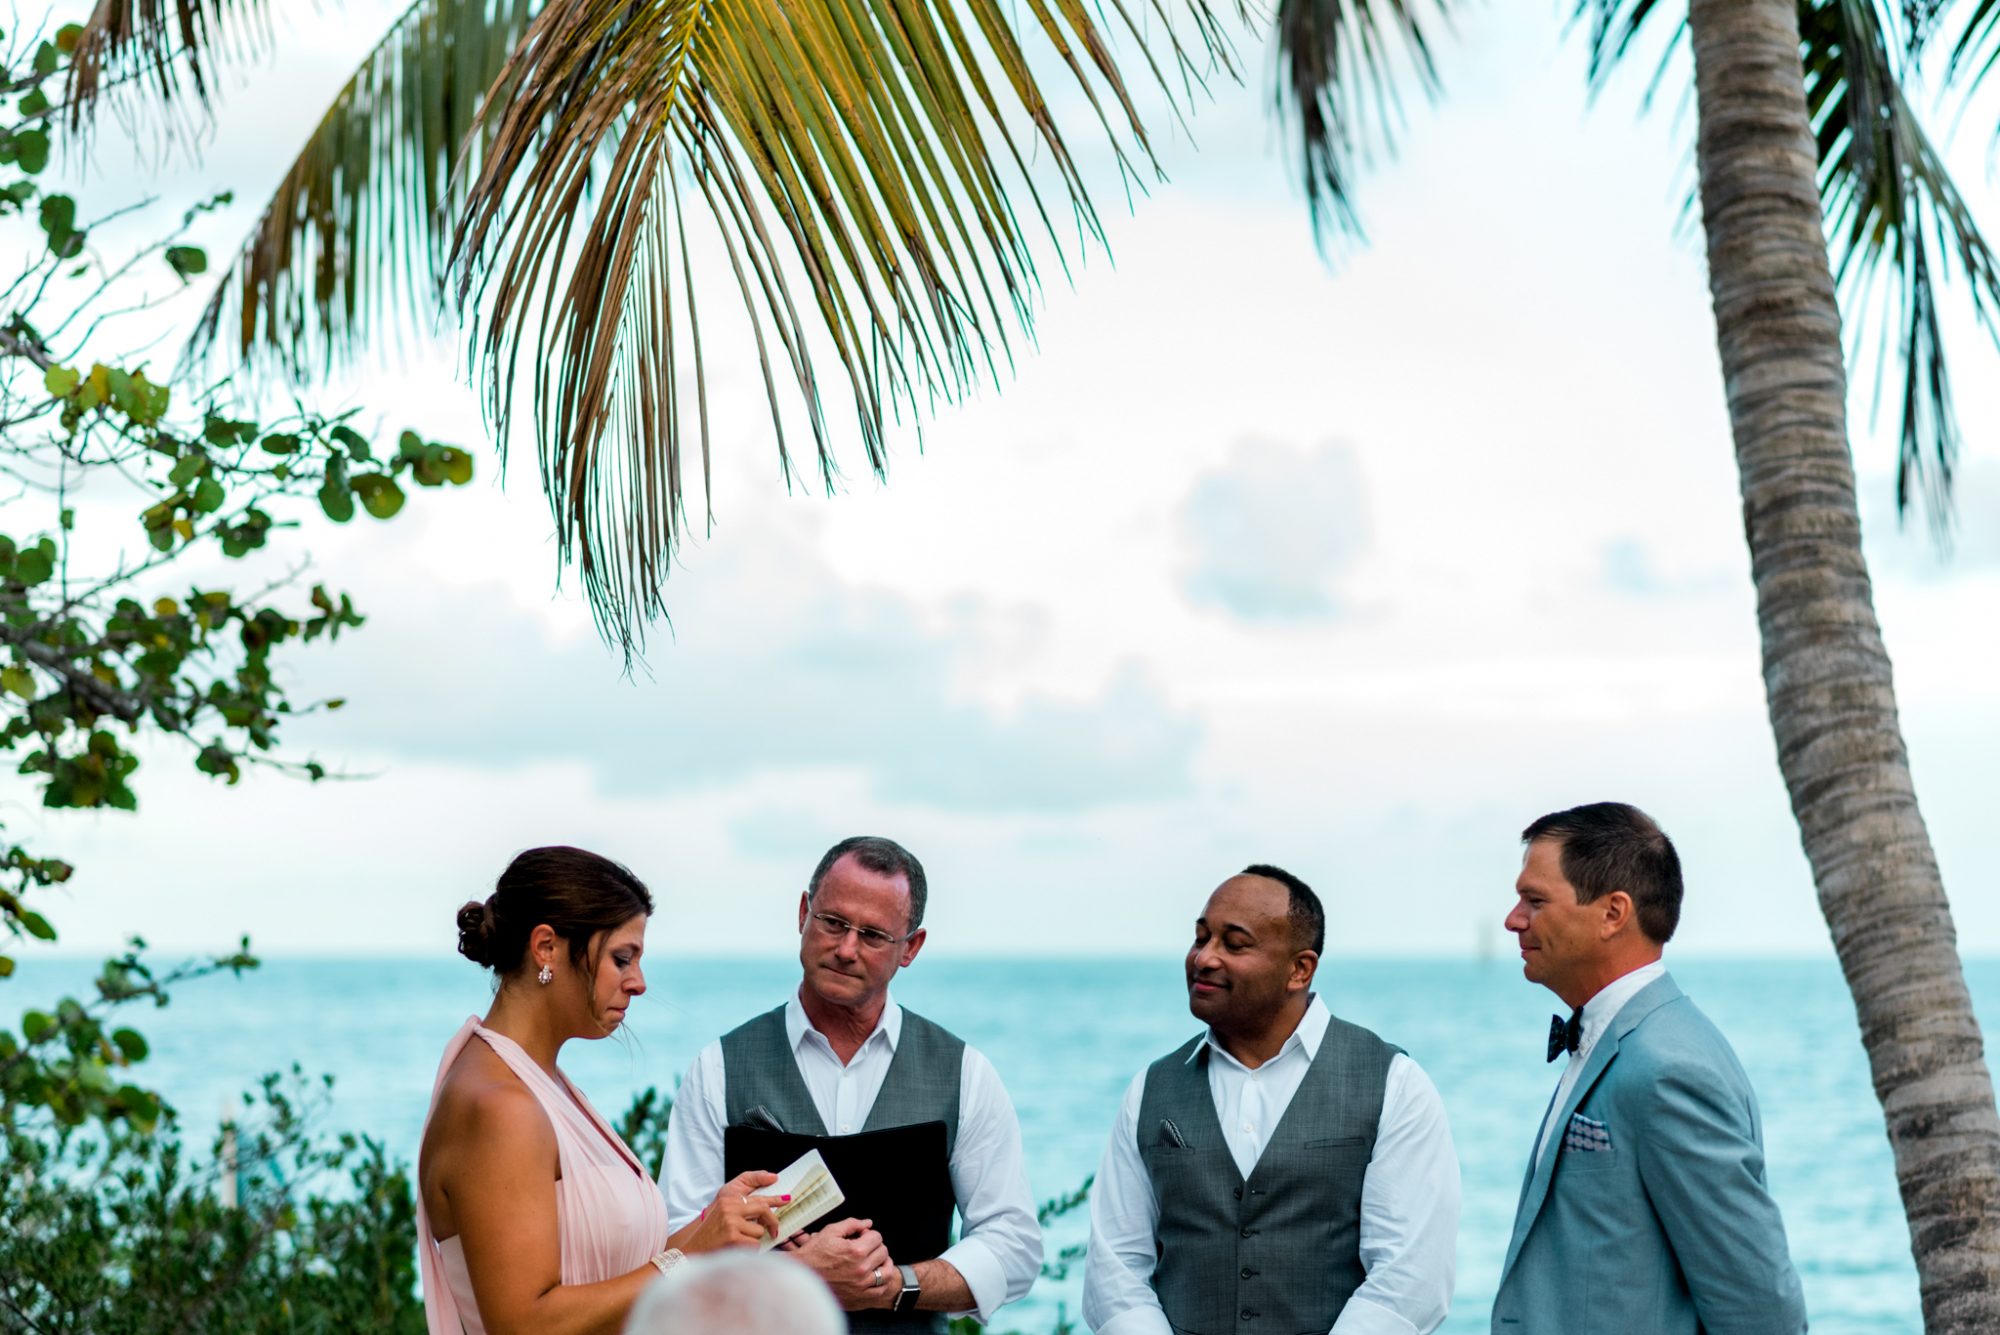 Freya and Jamie having a Key West wedding under a palm tree.